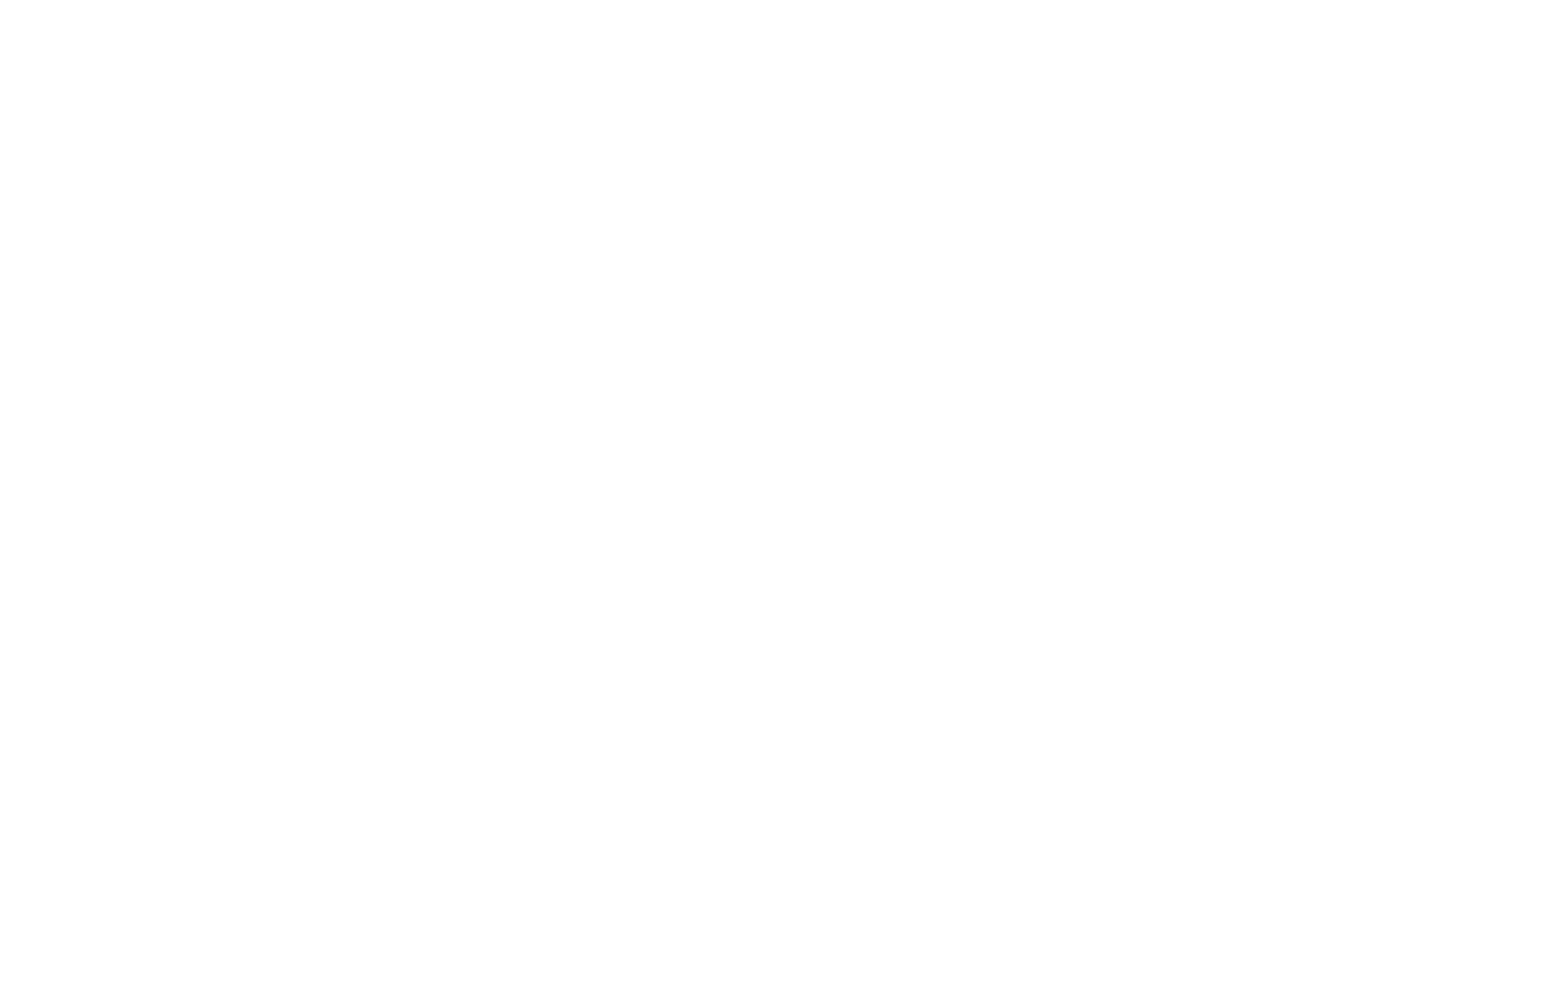 Концепция логотипа - Брендбук производителя тюбингов Baboom